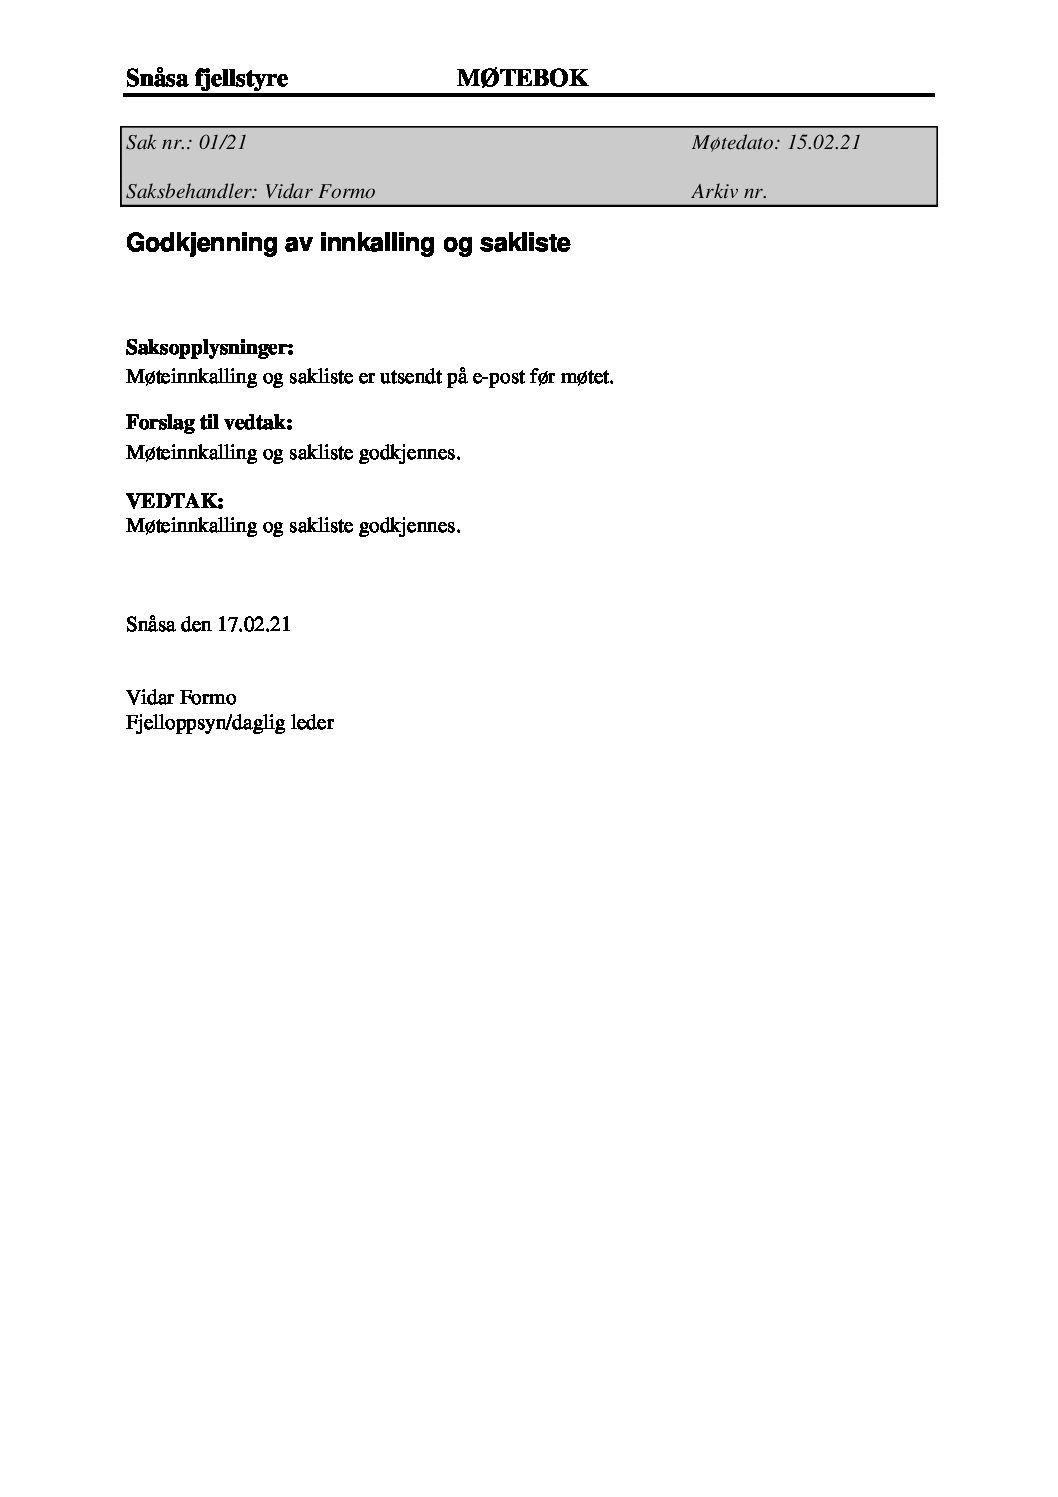 motereferat-snasa-fjellstyre-15-02-2021-pdf.jpg